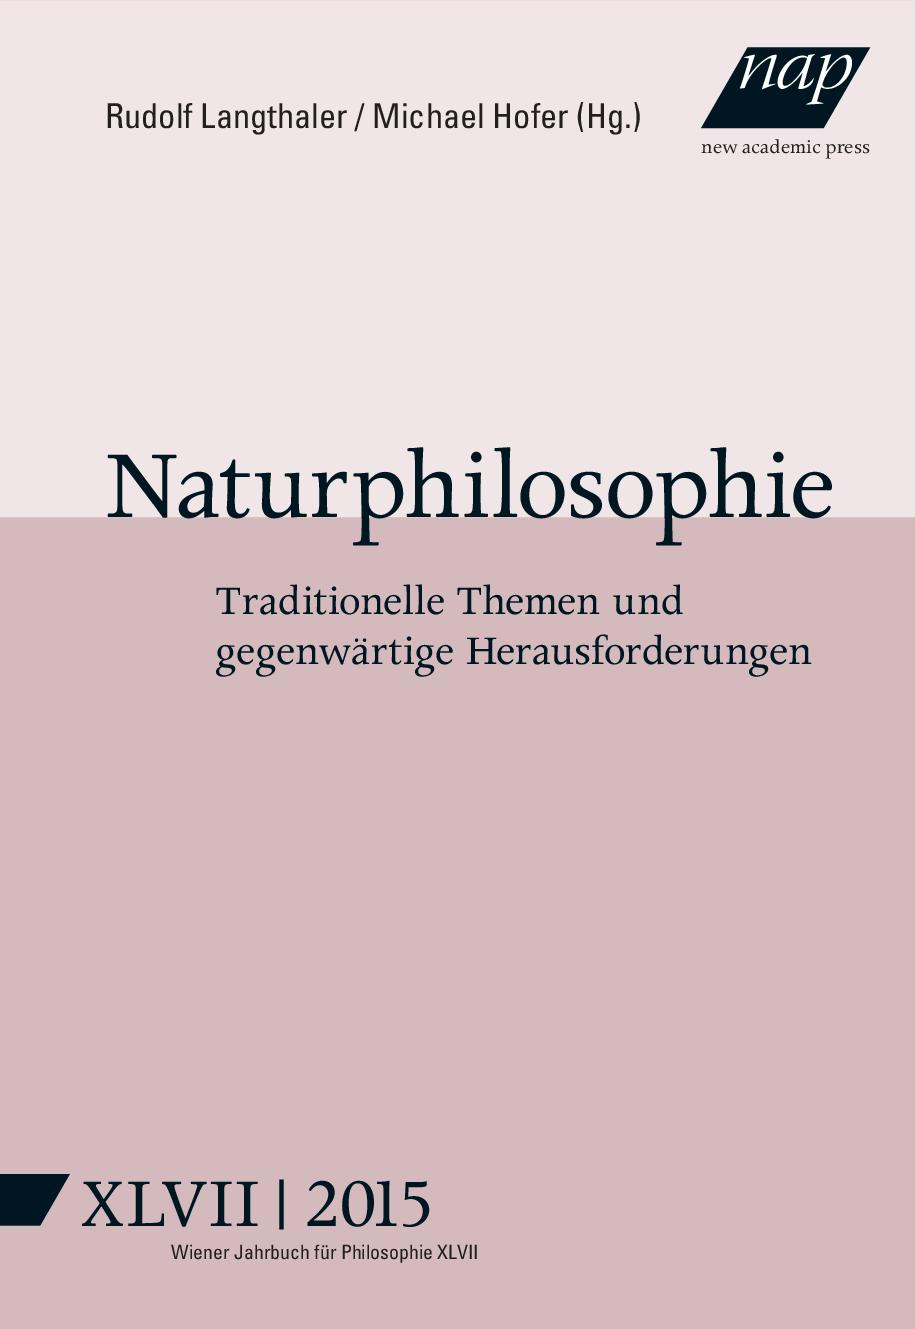 Cover Wiener Jahrbuch Philosophie Band 47 Naturphilosophie © Verlag new academic press